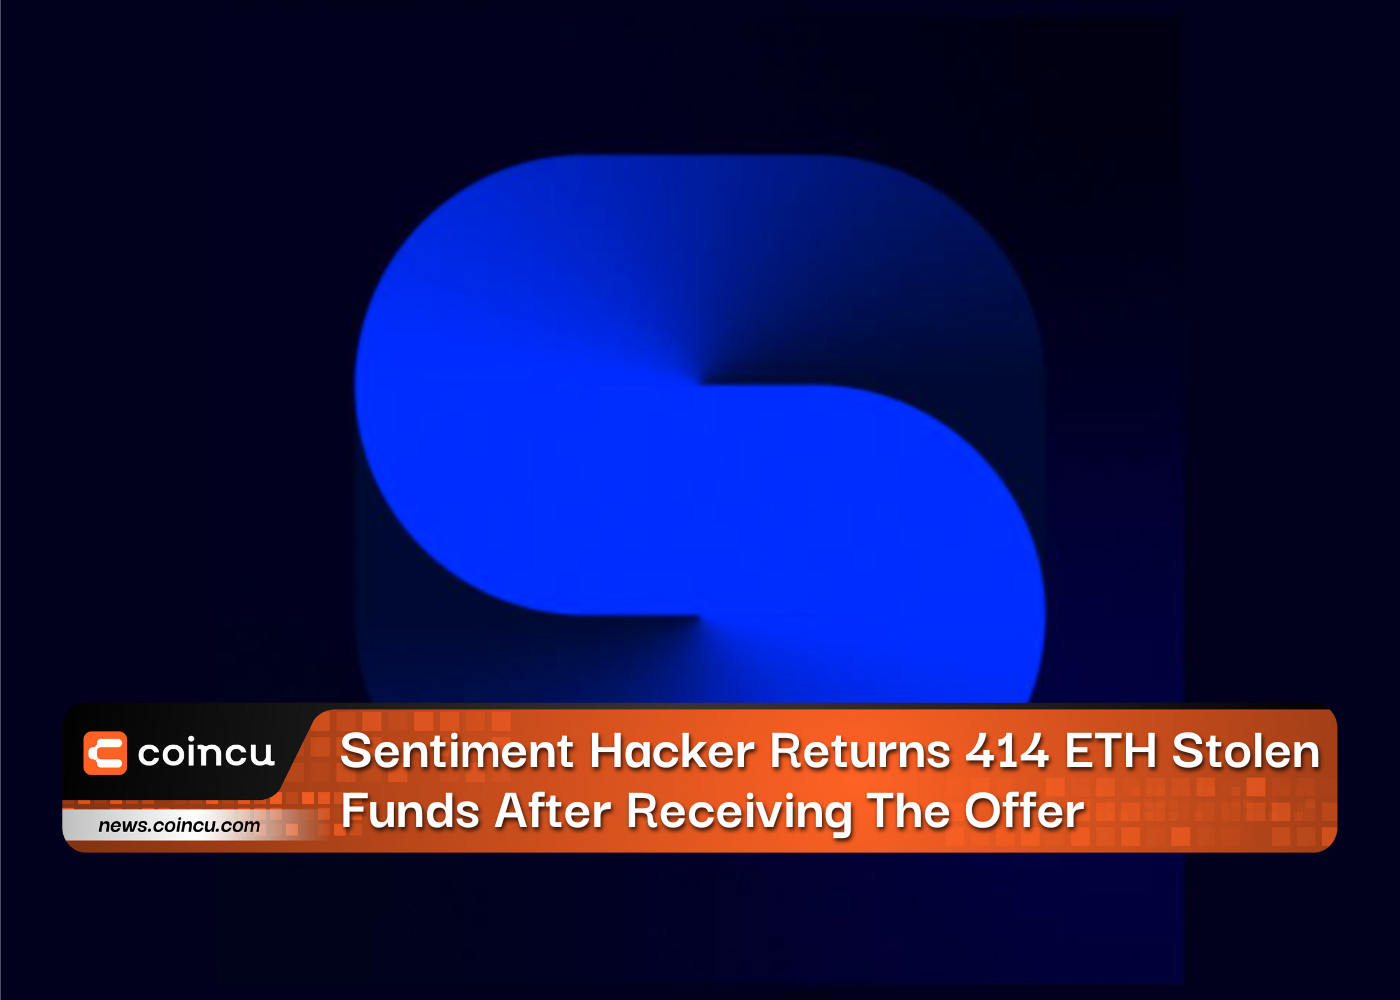 Sentiment Hacker Returns 414 ETH Stolen Funds After Receiving The Offer